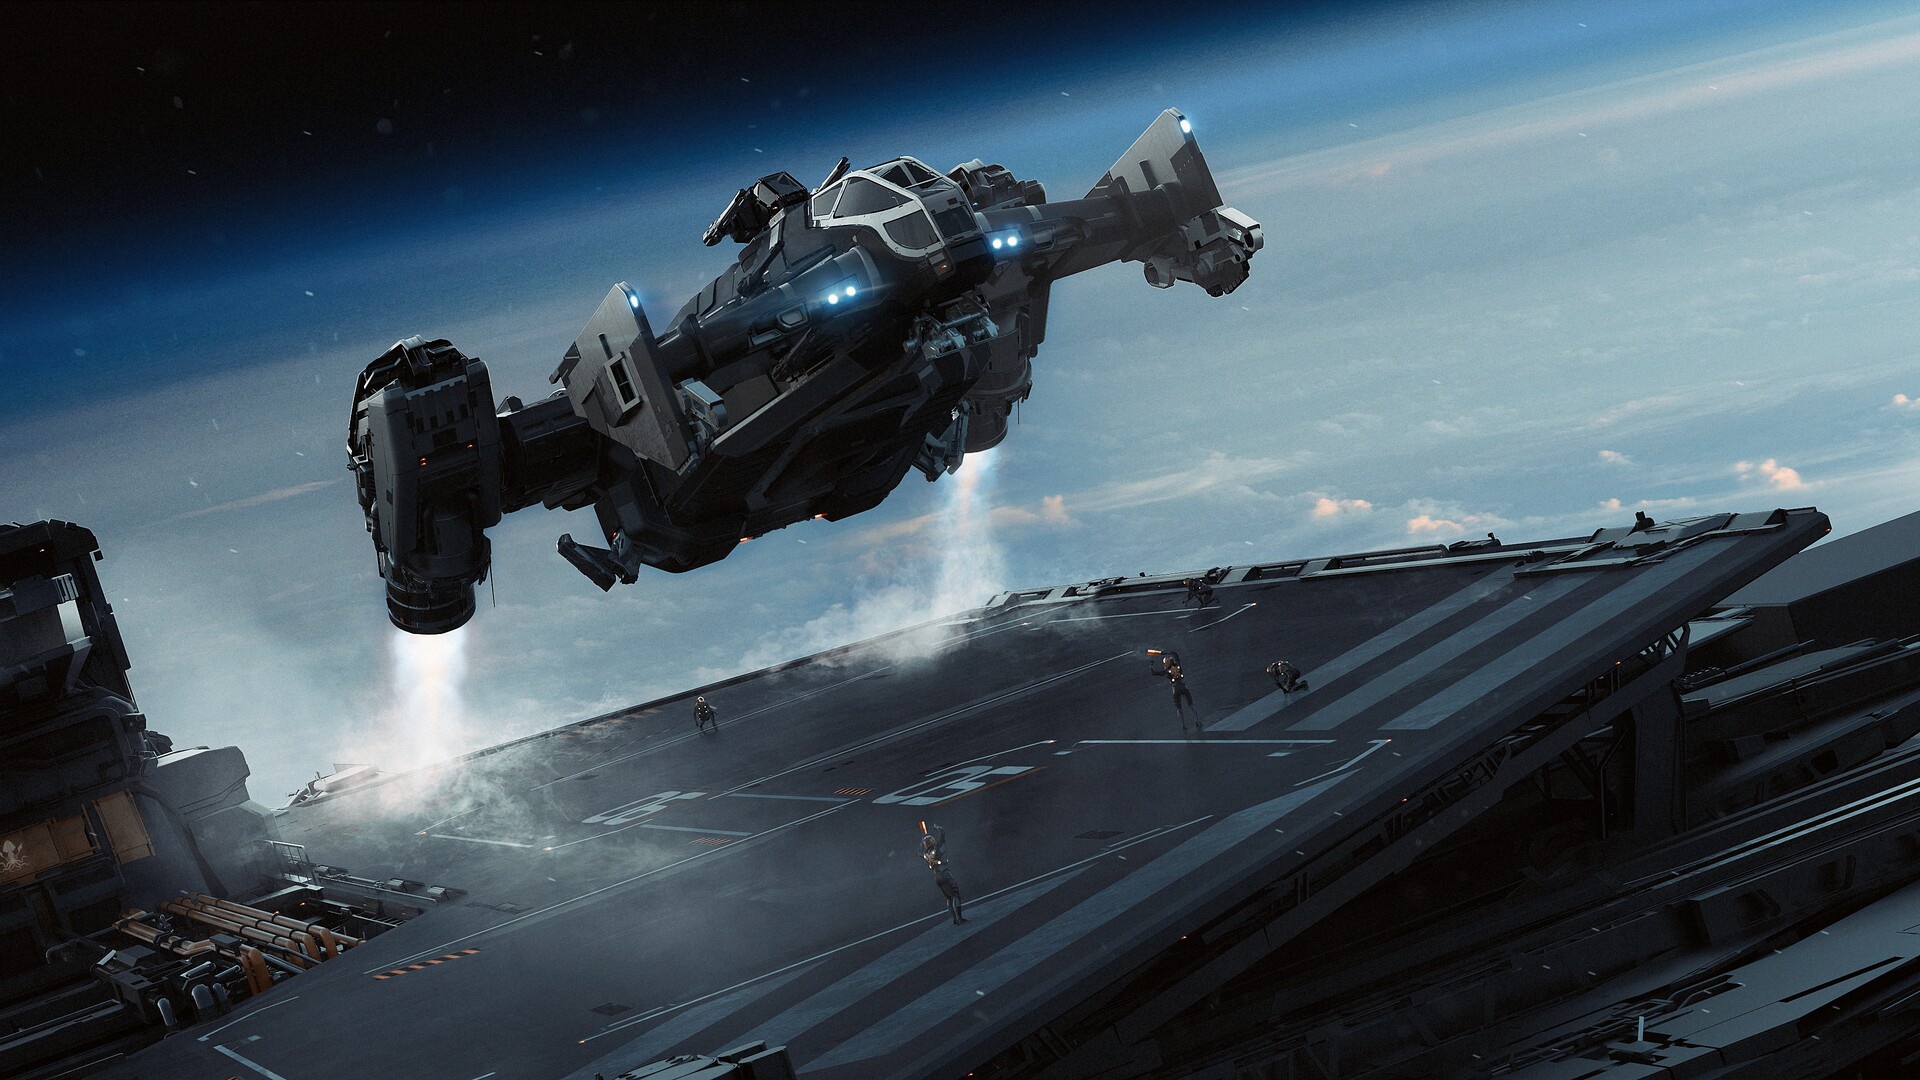 General 1920x1080 render science fiction PC gaming vehicle spaceship Star Citizen Cutlass Black